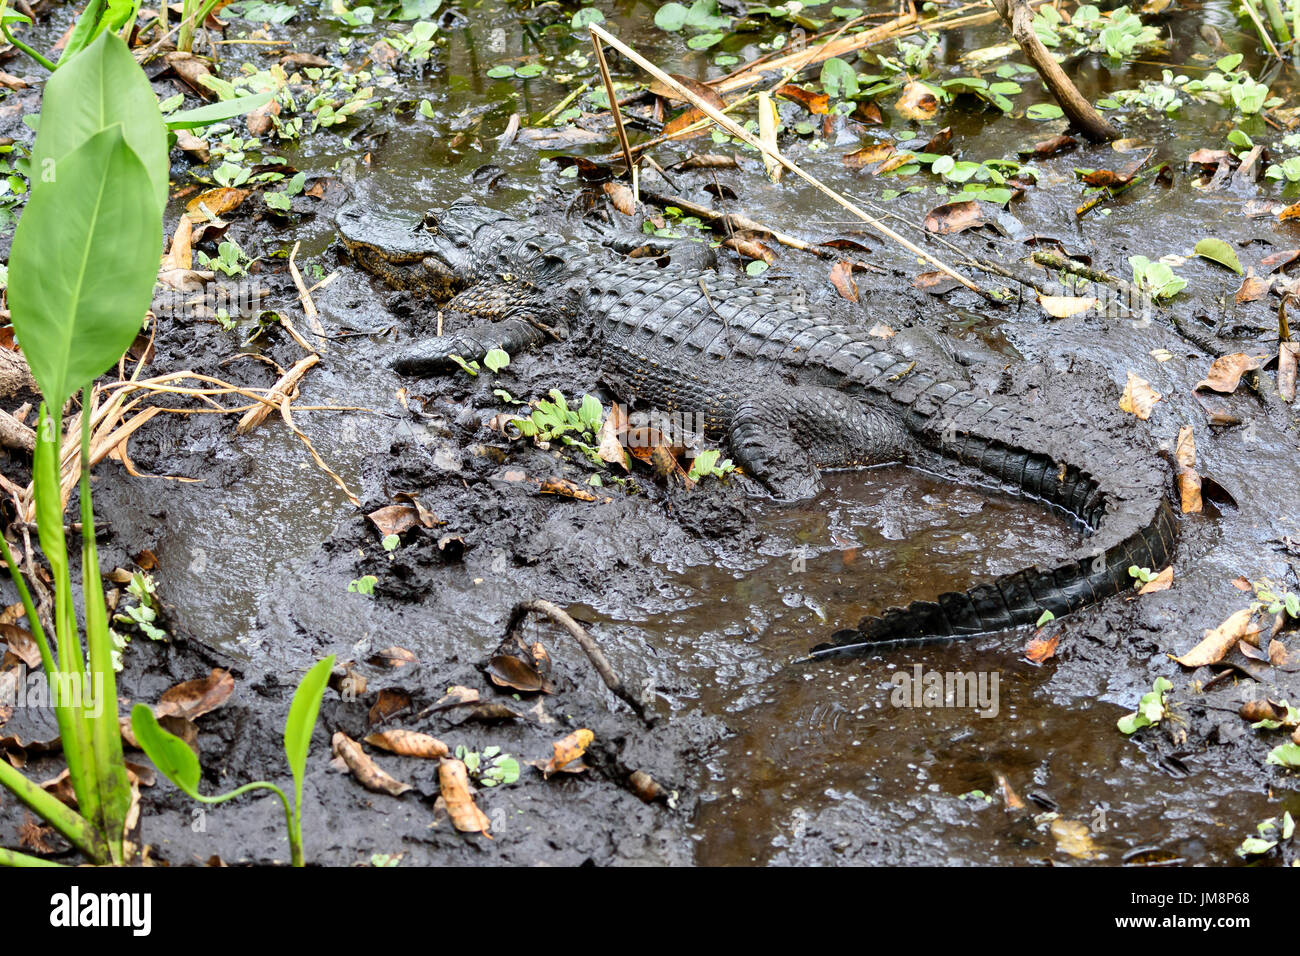 American alligator (Alligator mississippiensis), Corkscrew Swamp Sanctuary, Florida, USA Stockfoto